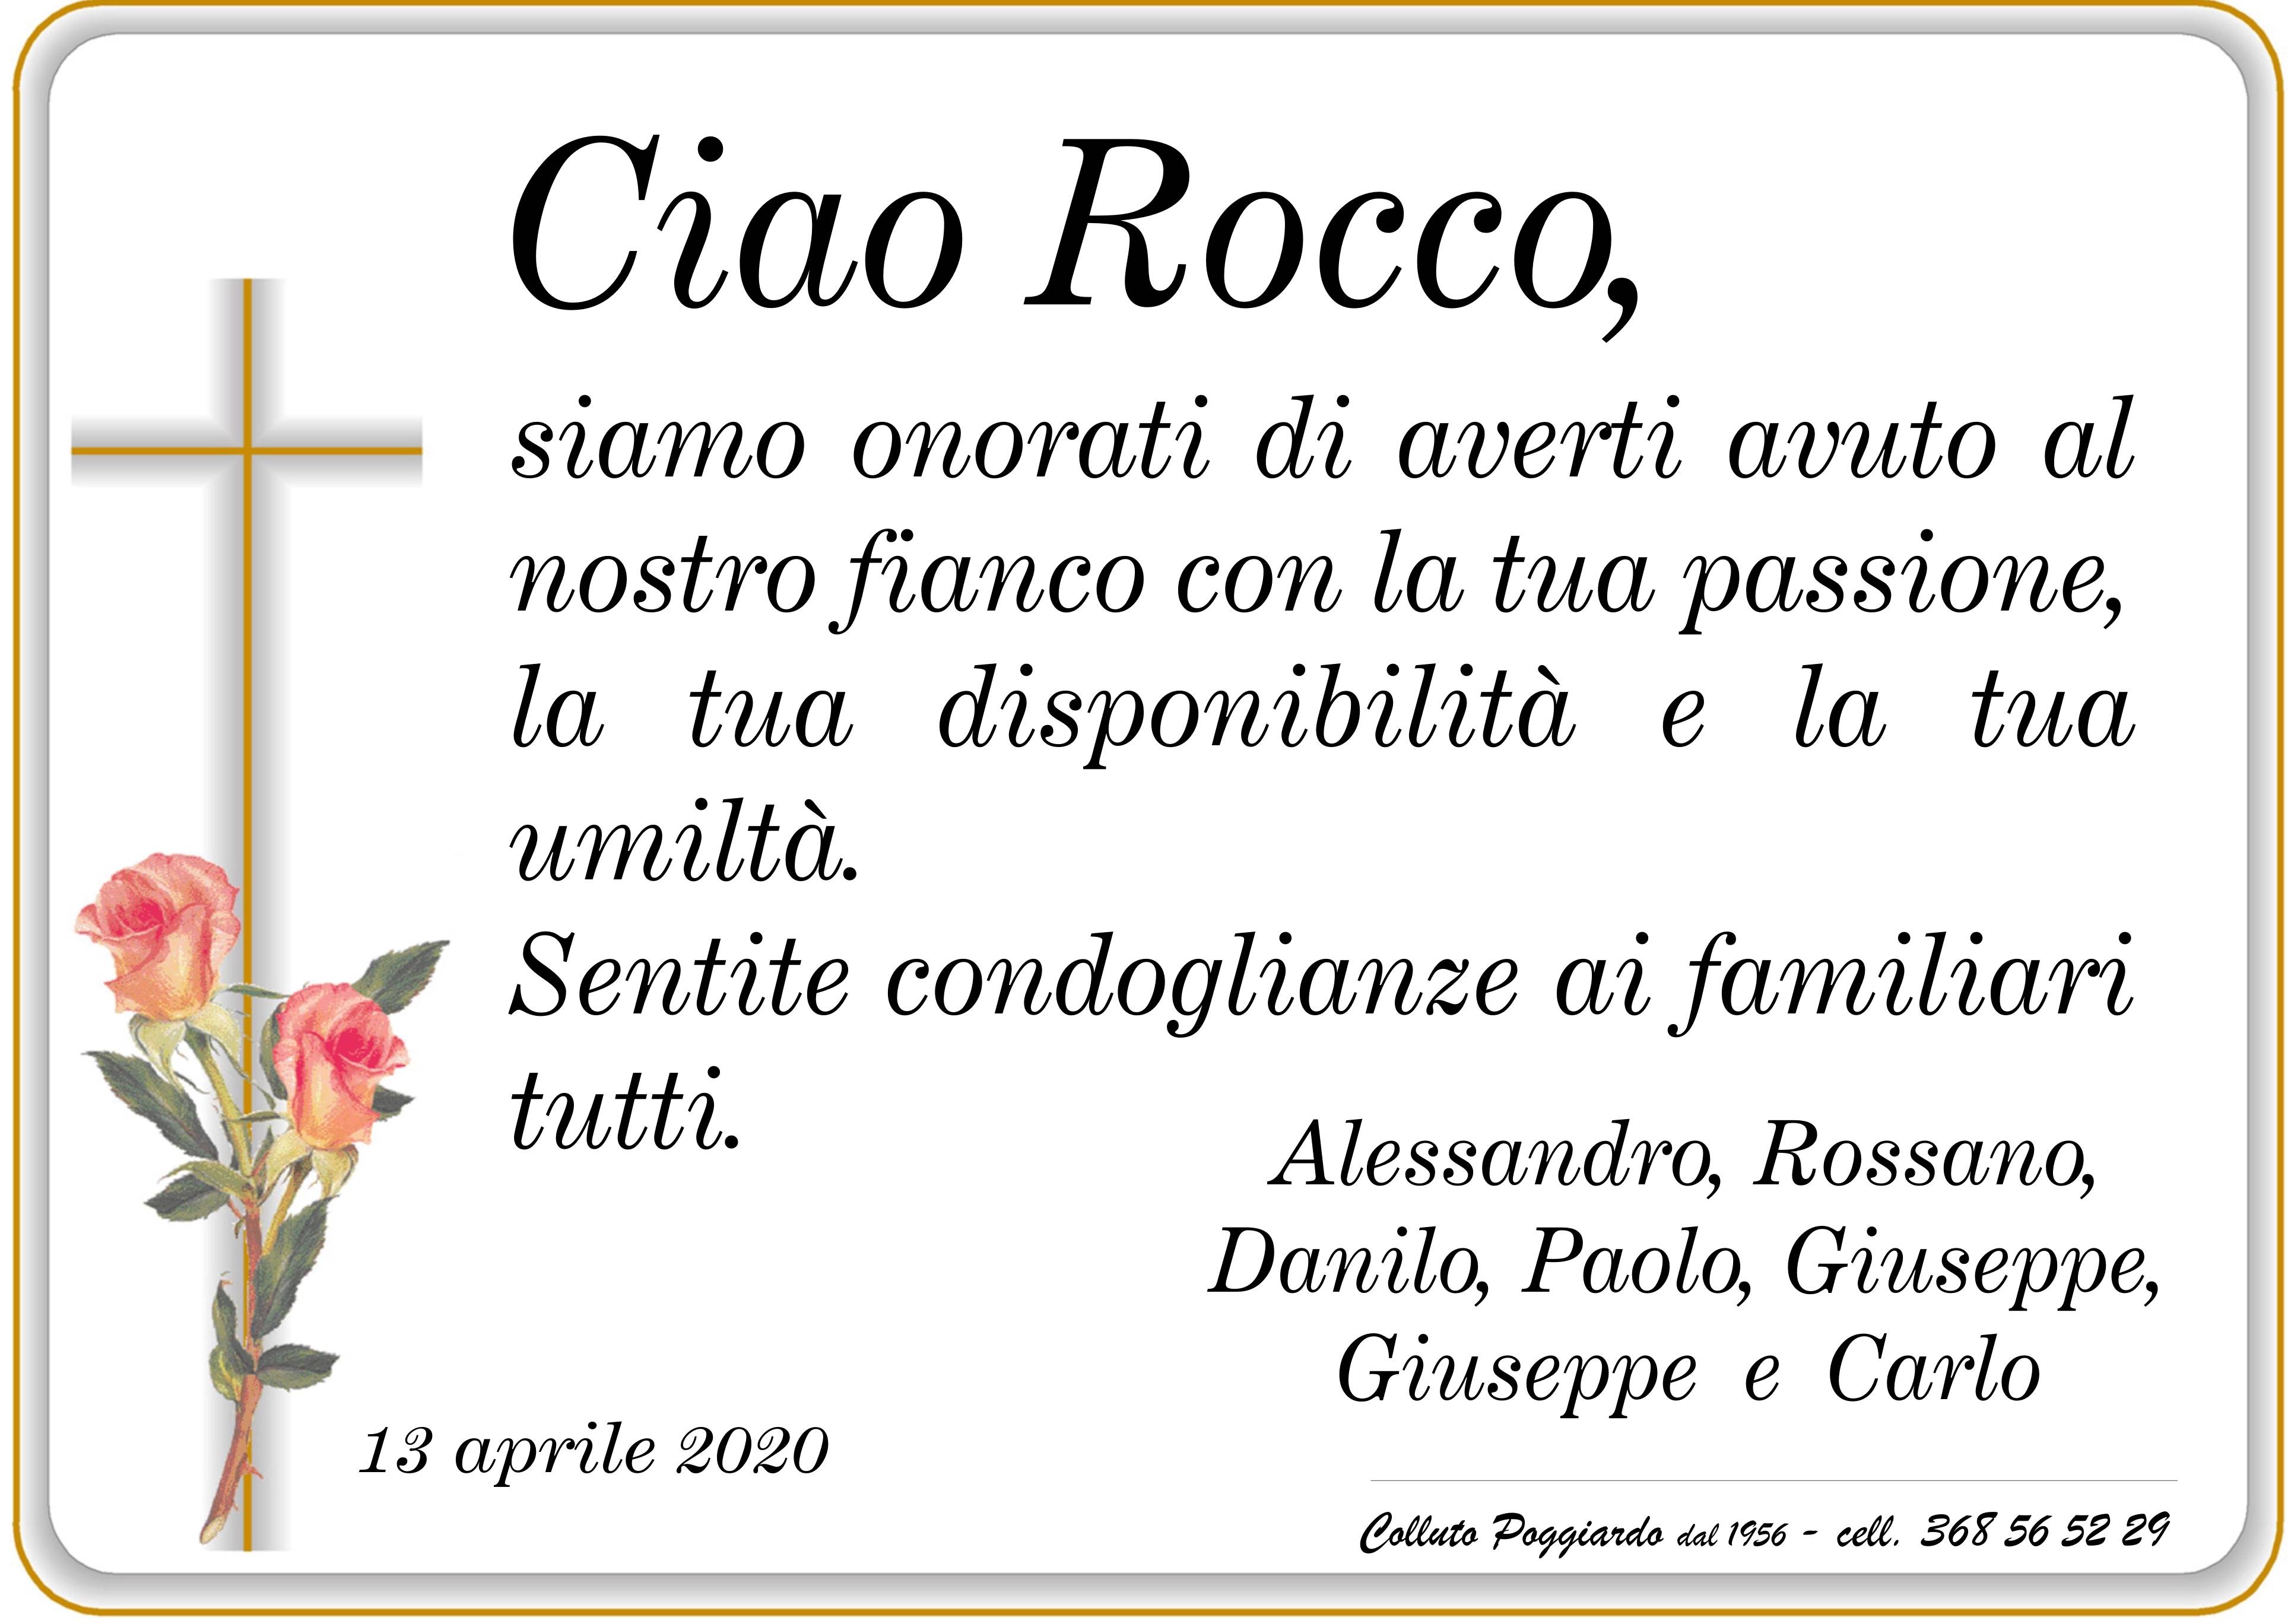 Ciao Rocco